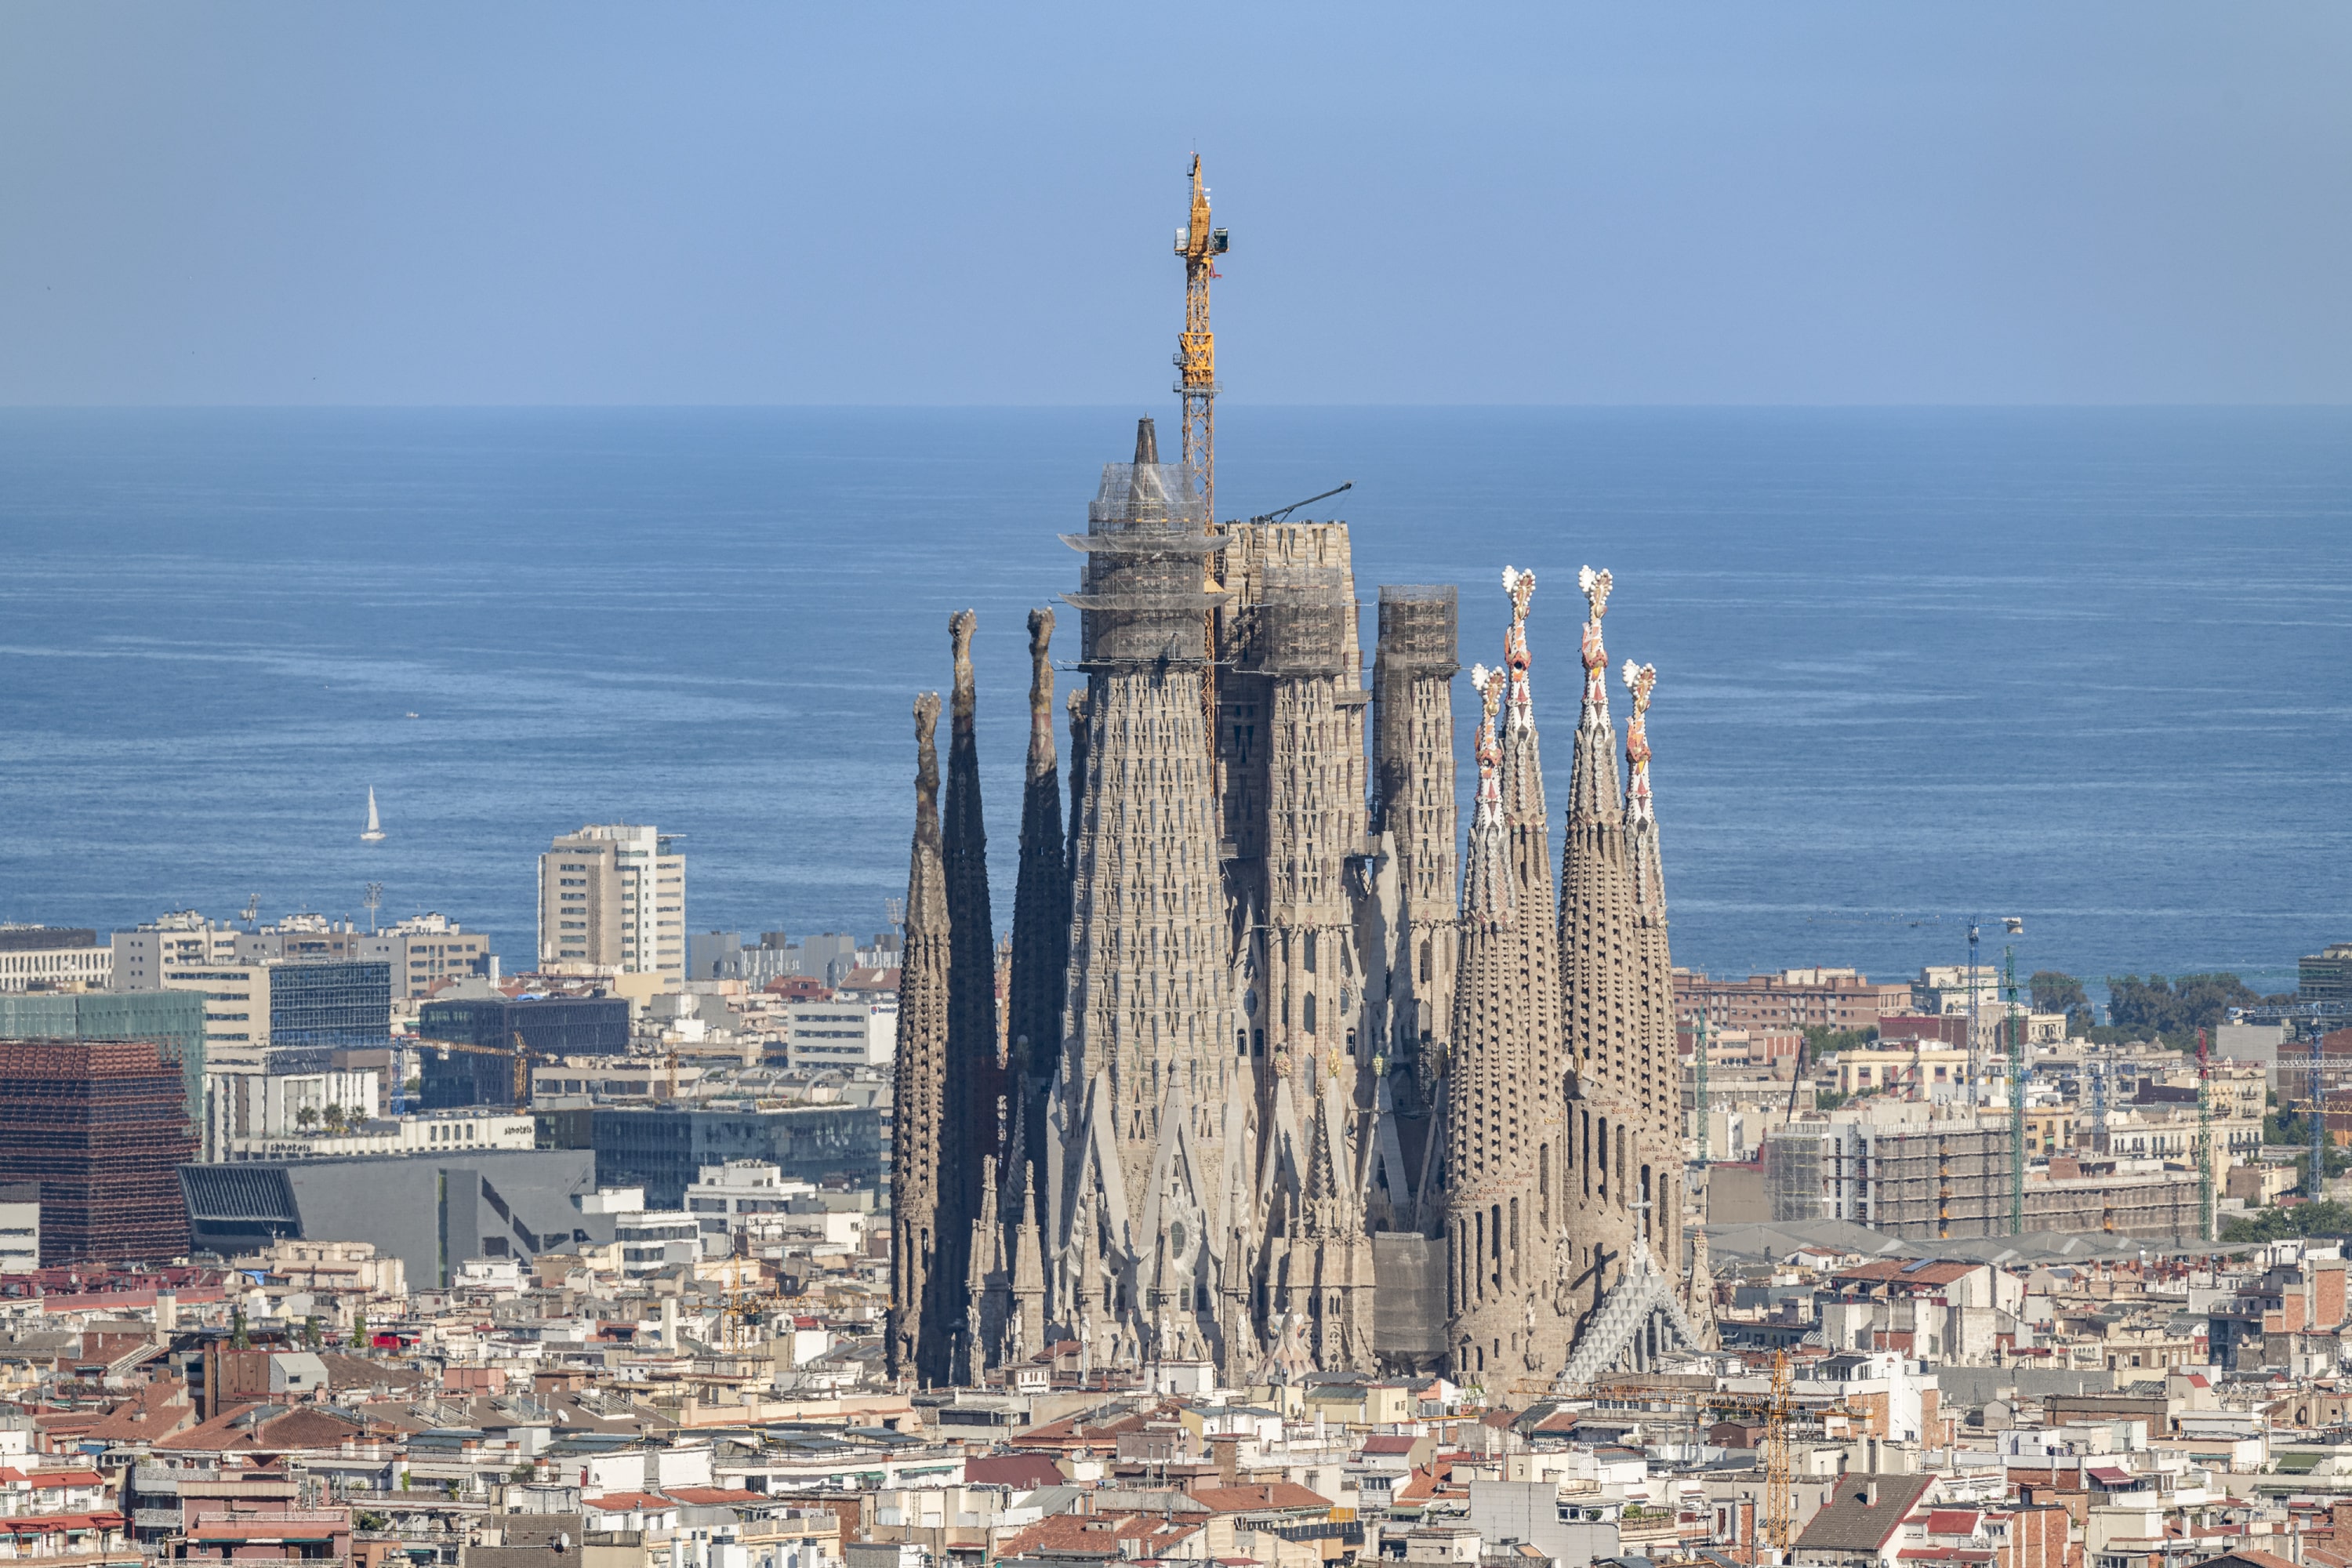 The Sagrada Família basilica, overlooking the city of Barcelona (image courtesy of Sagrada Família)